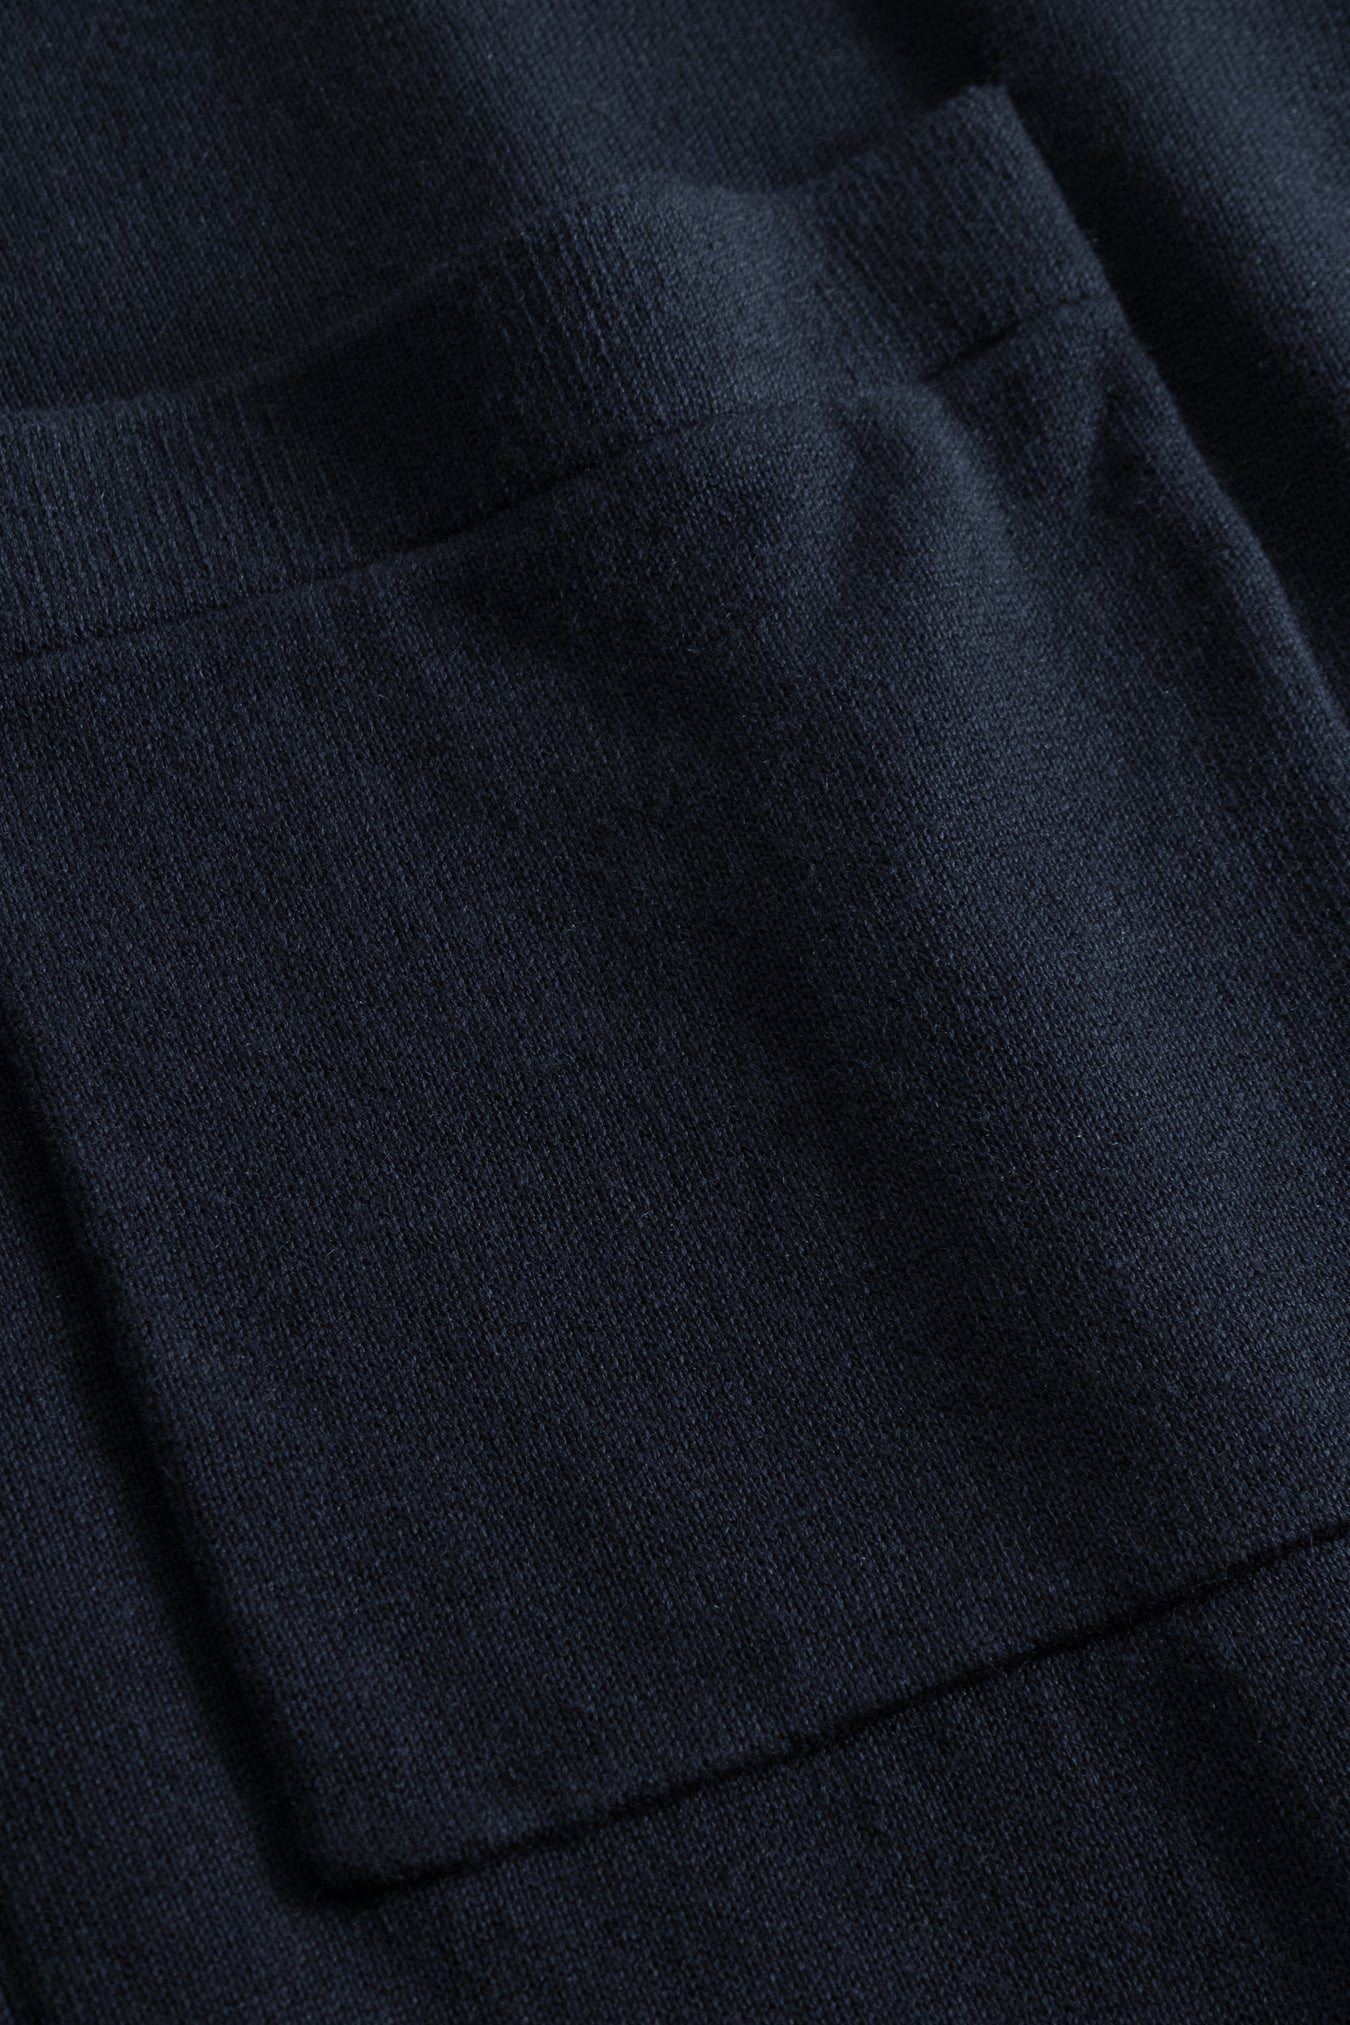 Rollo Cotton Linen SS Shirt - Dark Navy